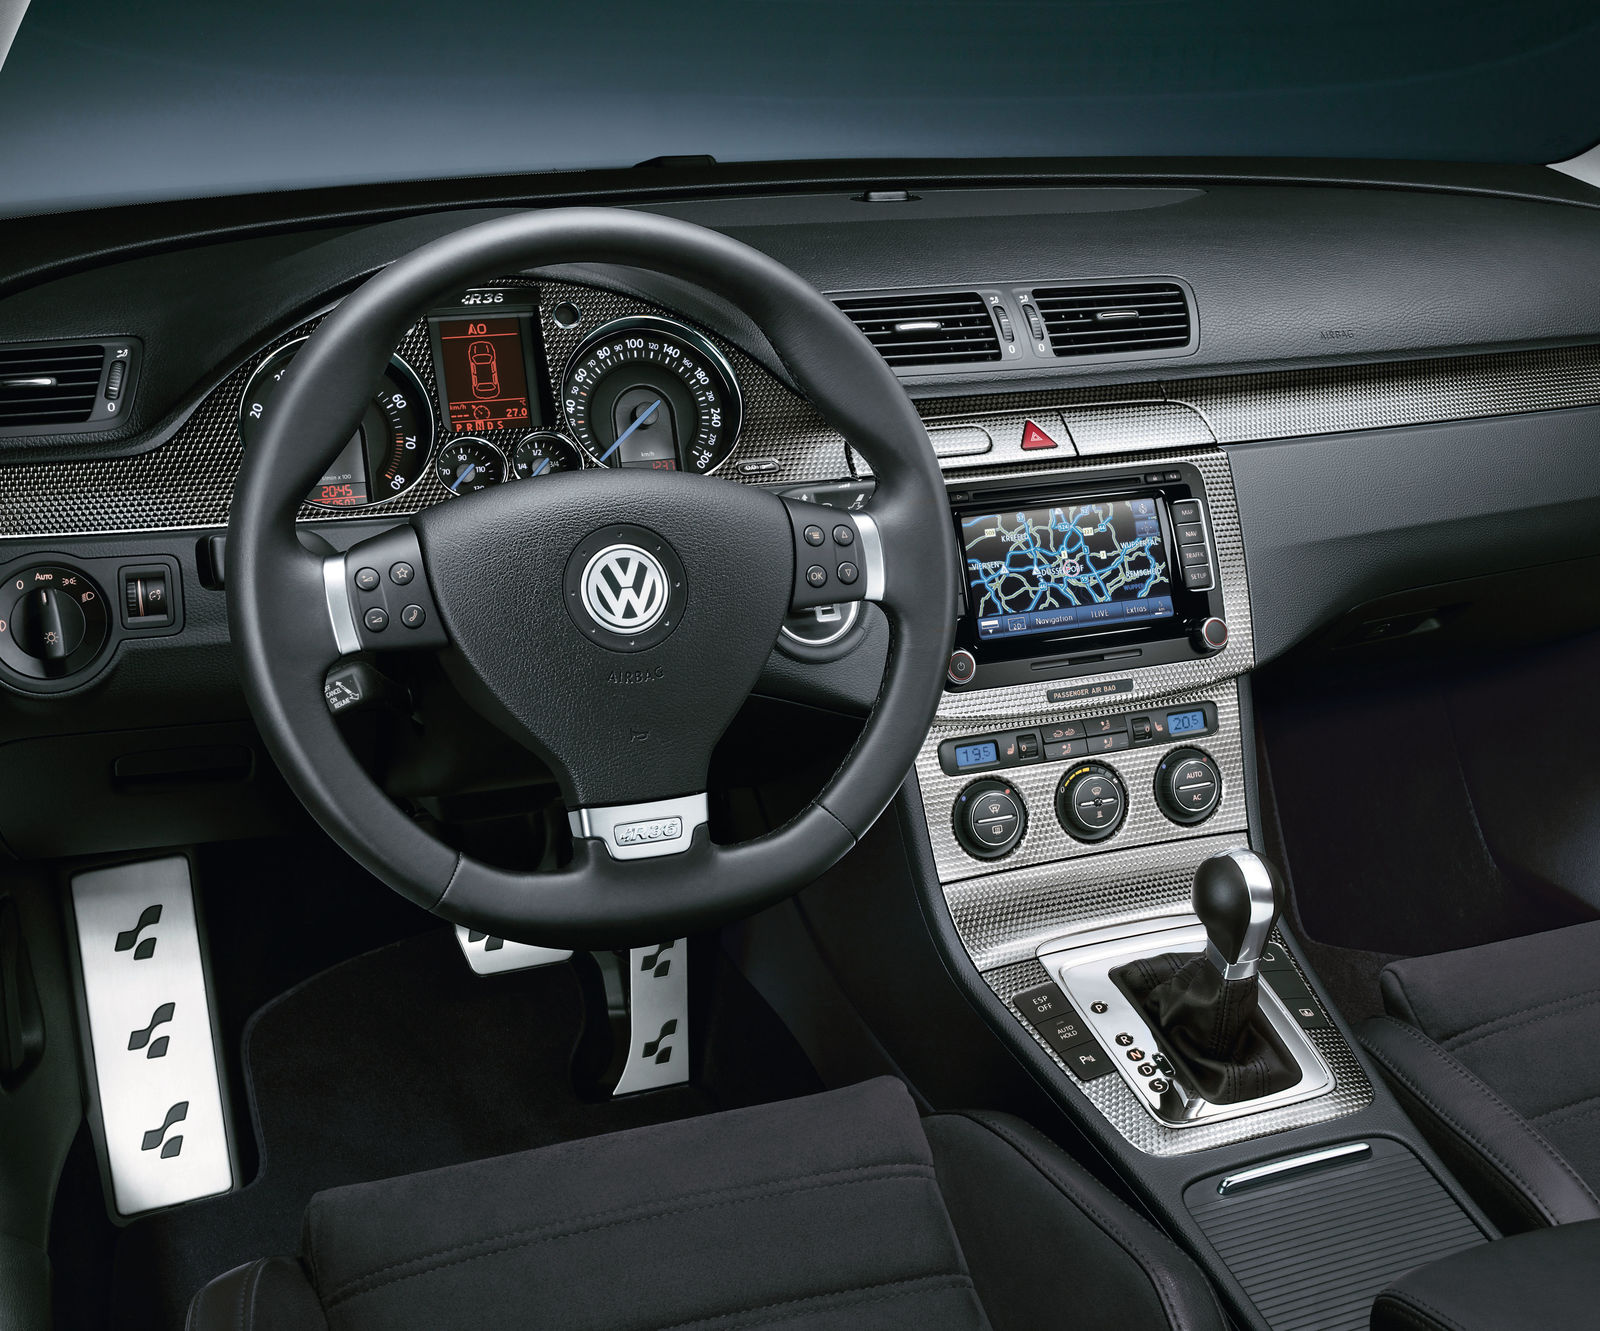 Пассат б6 2008 год. Фольксваген Пассат b6 салон. B6 Фольксваген Пассат 2007. VW Passat b6 Interior. Volkswagen Passat b6 салон.